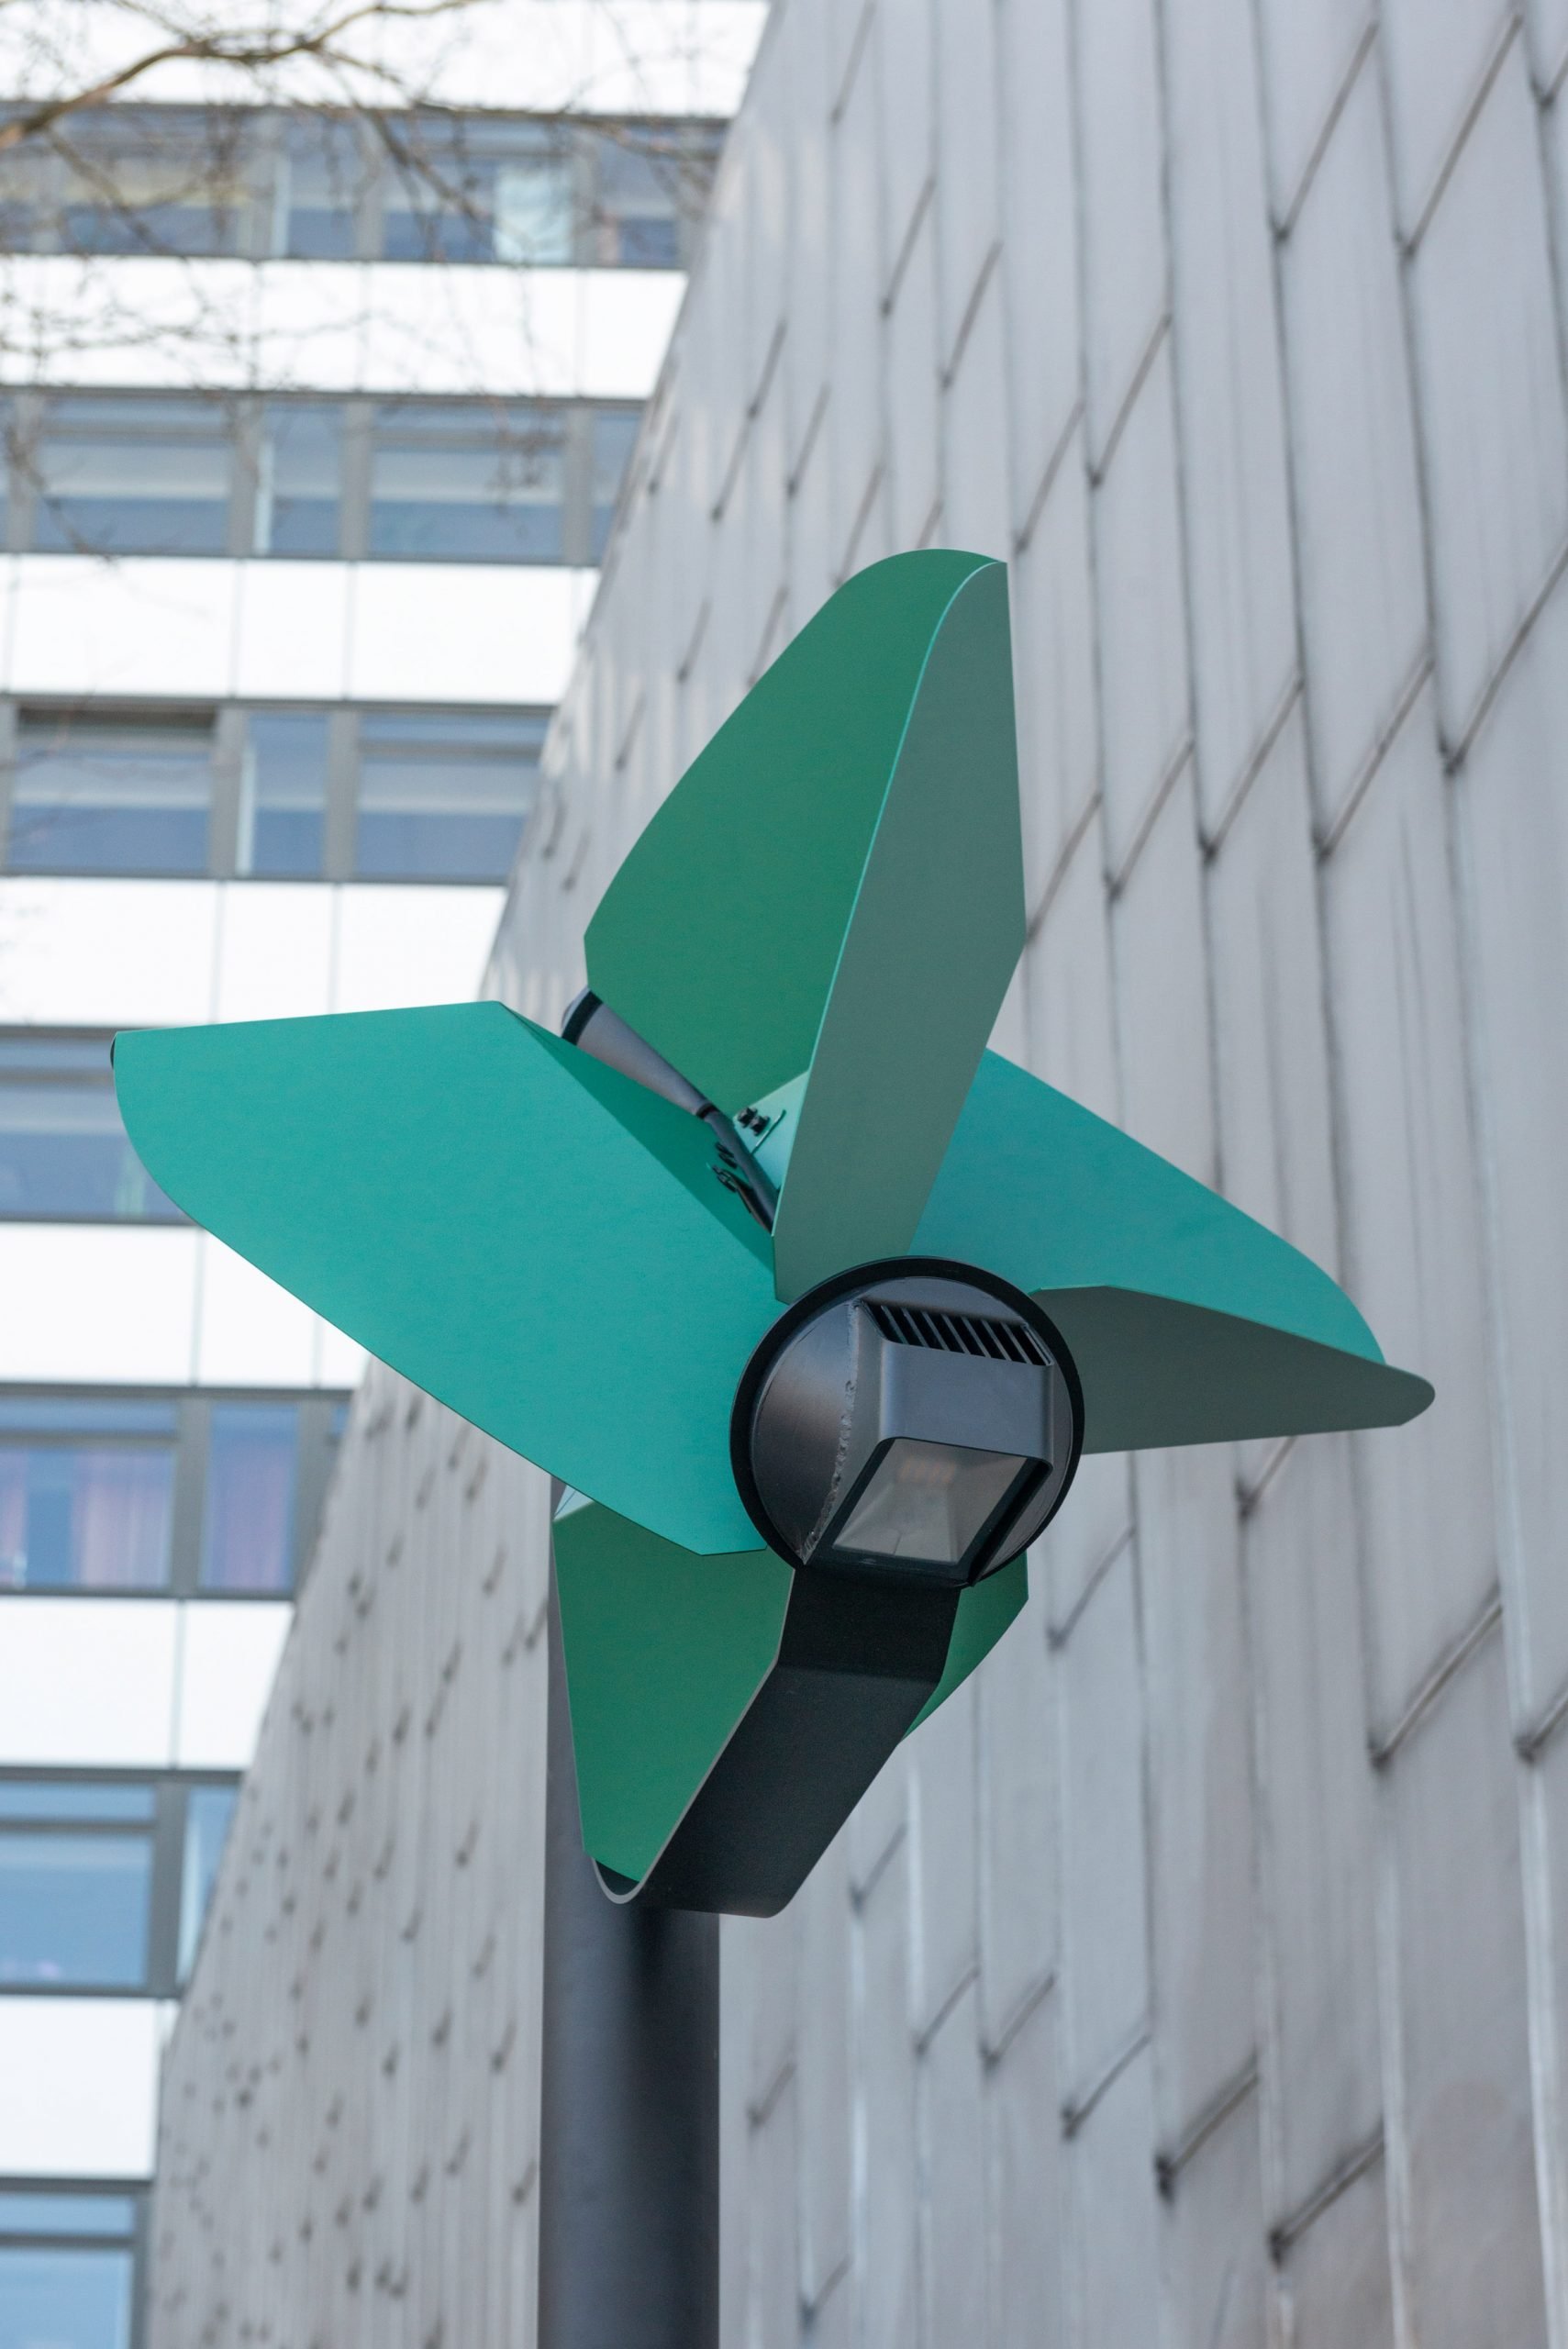 Pinwheel-shaped turbine of wind-powered street light by Tobias Trübenbacher